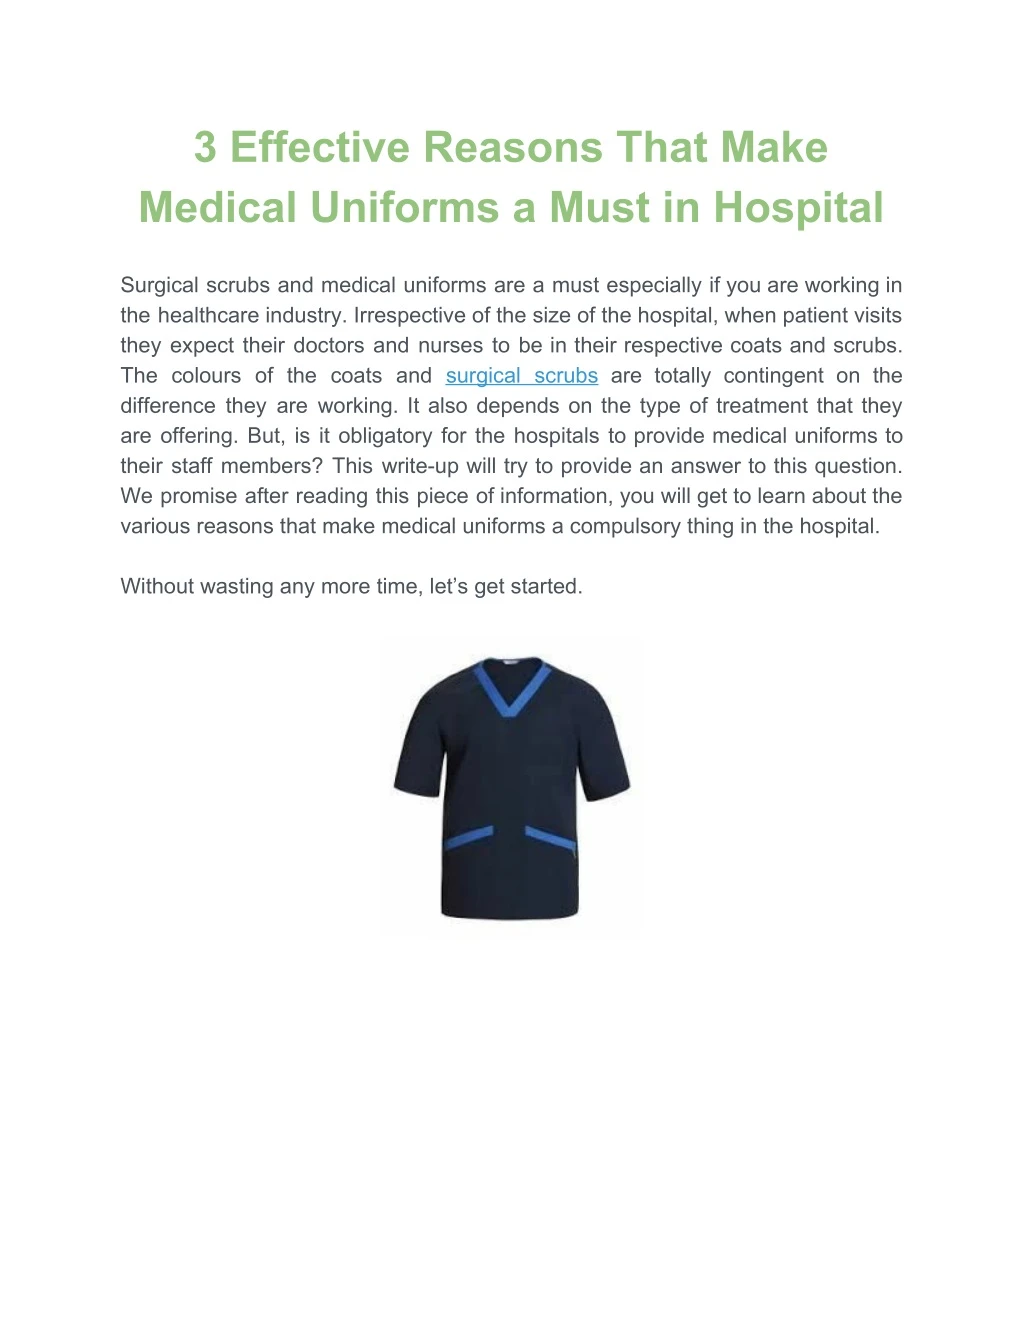 3 effective reasons that make medical uniforms